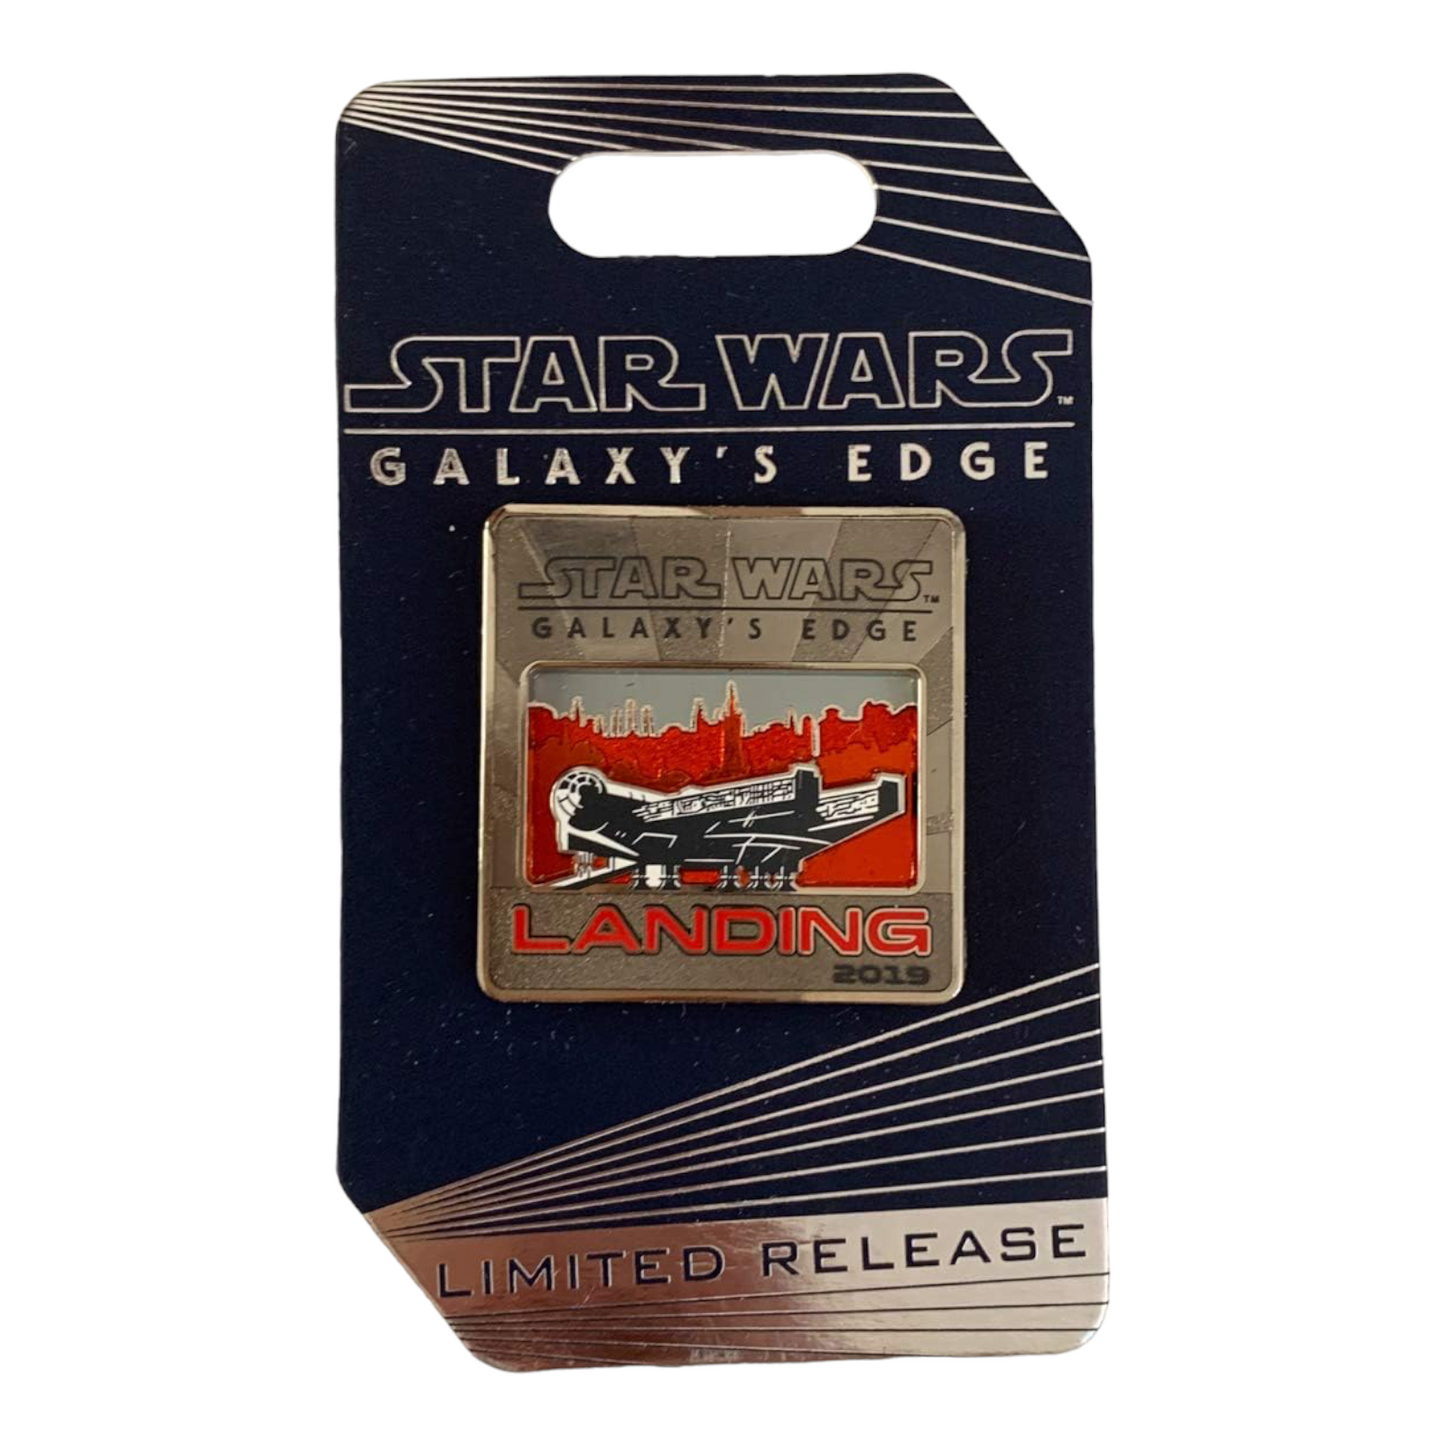 Star Wars Pin Galaxy's Edge Landing - Black Spire Outpost - 2019 Disney Pin